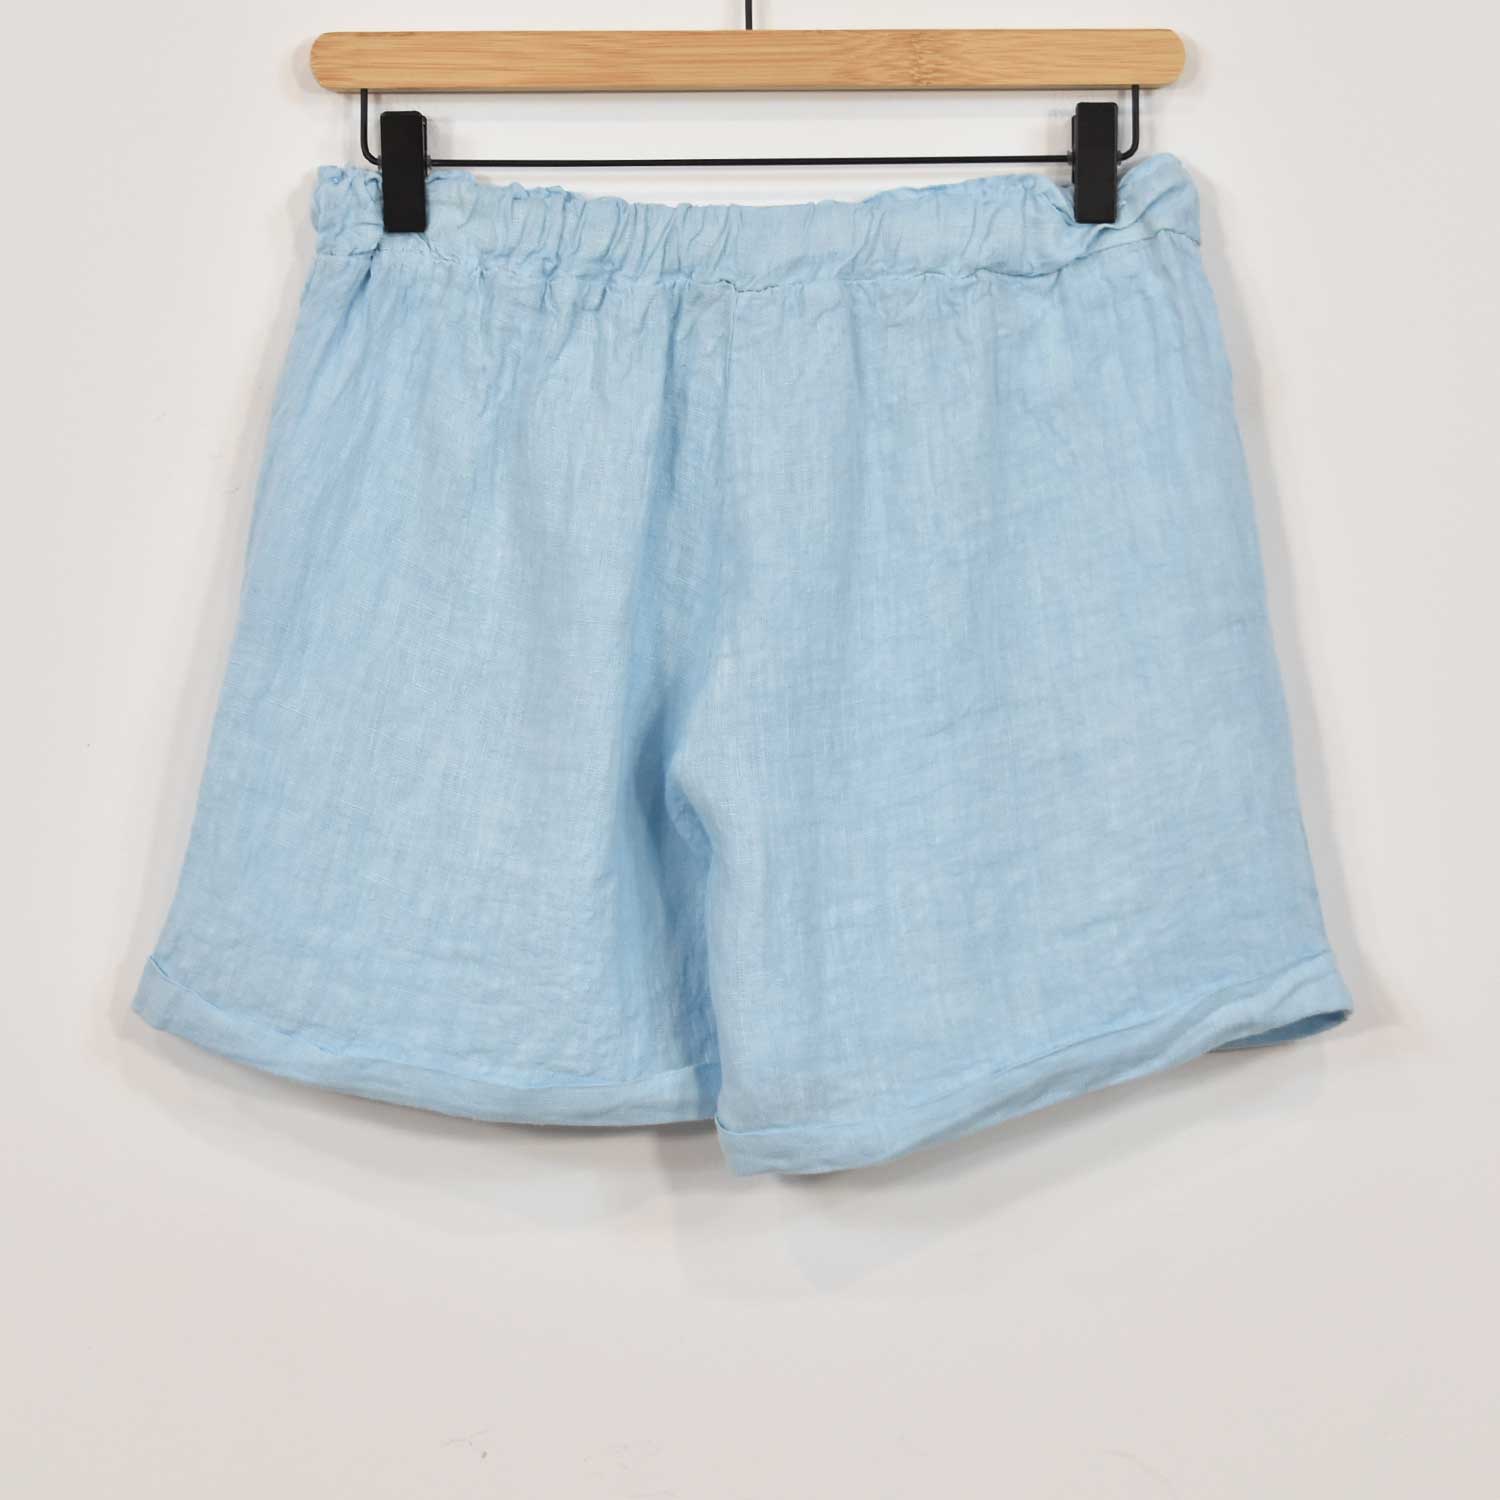 Blue light short linen shorts